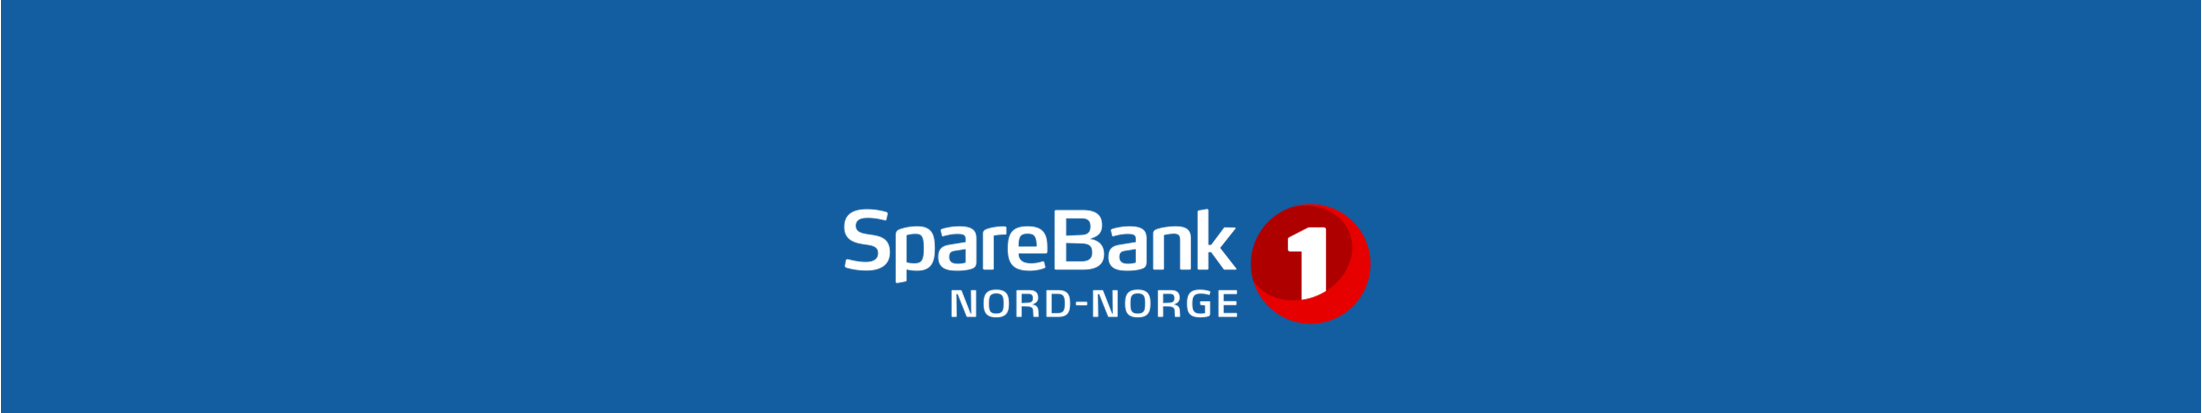 Kontaktinformasjon: SpareBank 1 Nord-Norge Postboks 6800 9298 Tromsø Konsernsjef Jan-Frode Janson Konserndirektør Rolf Eigil Bygdnes Tlf. 90975183 Tlf.